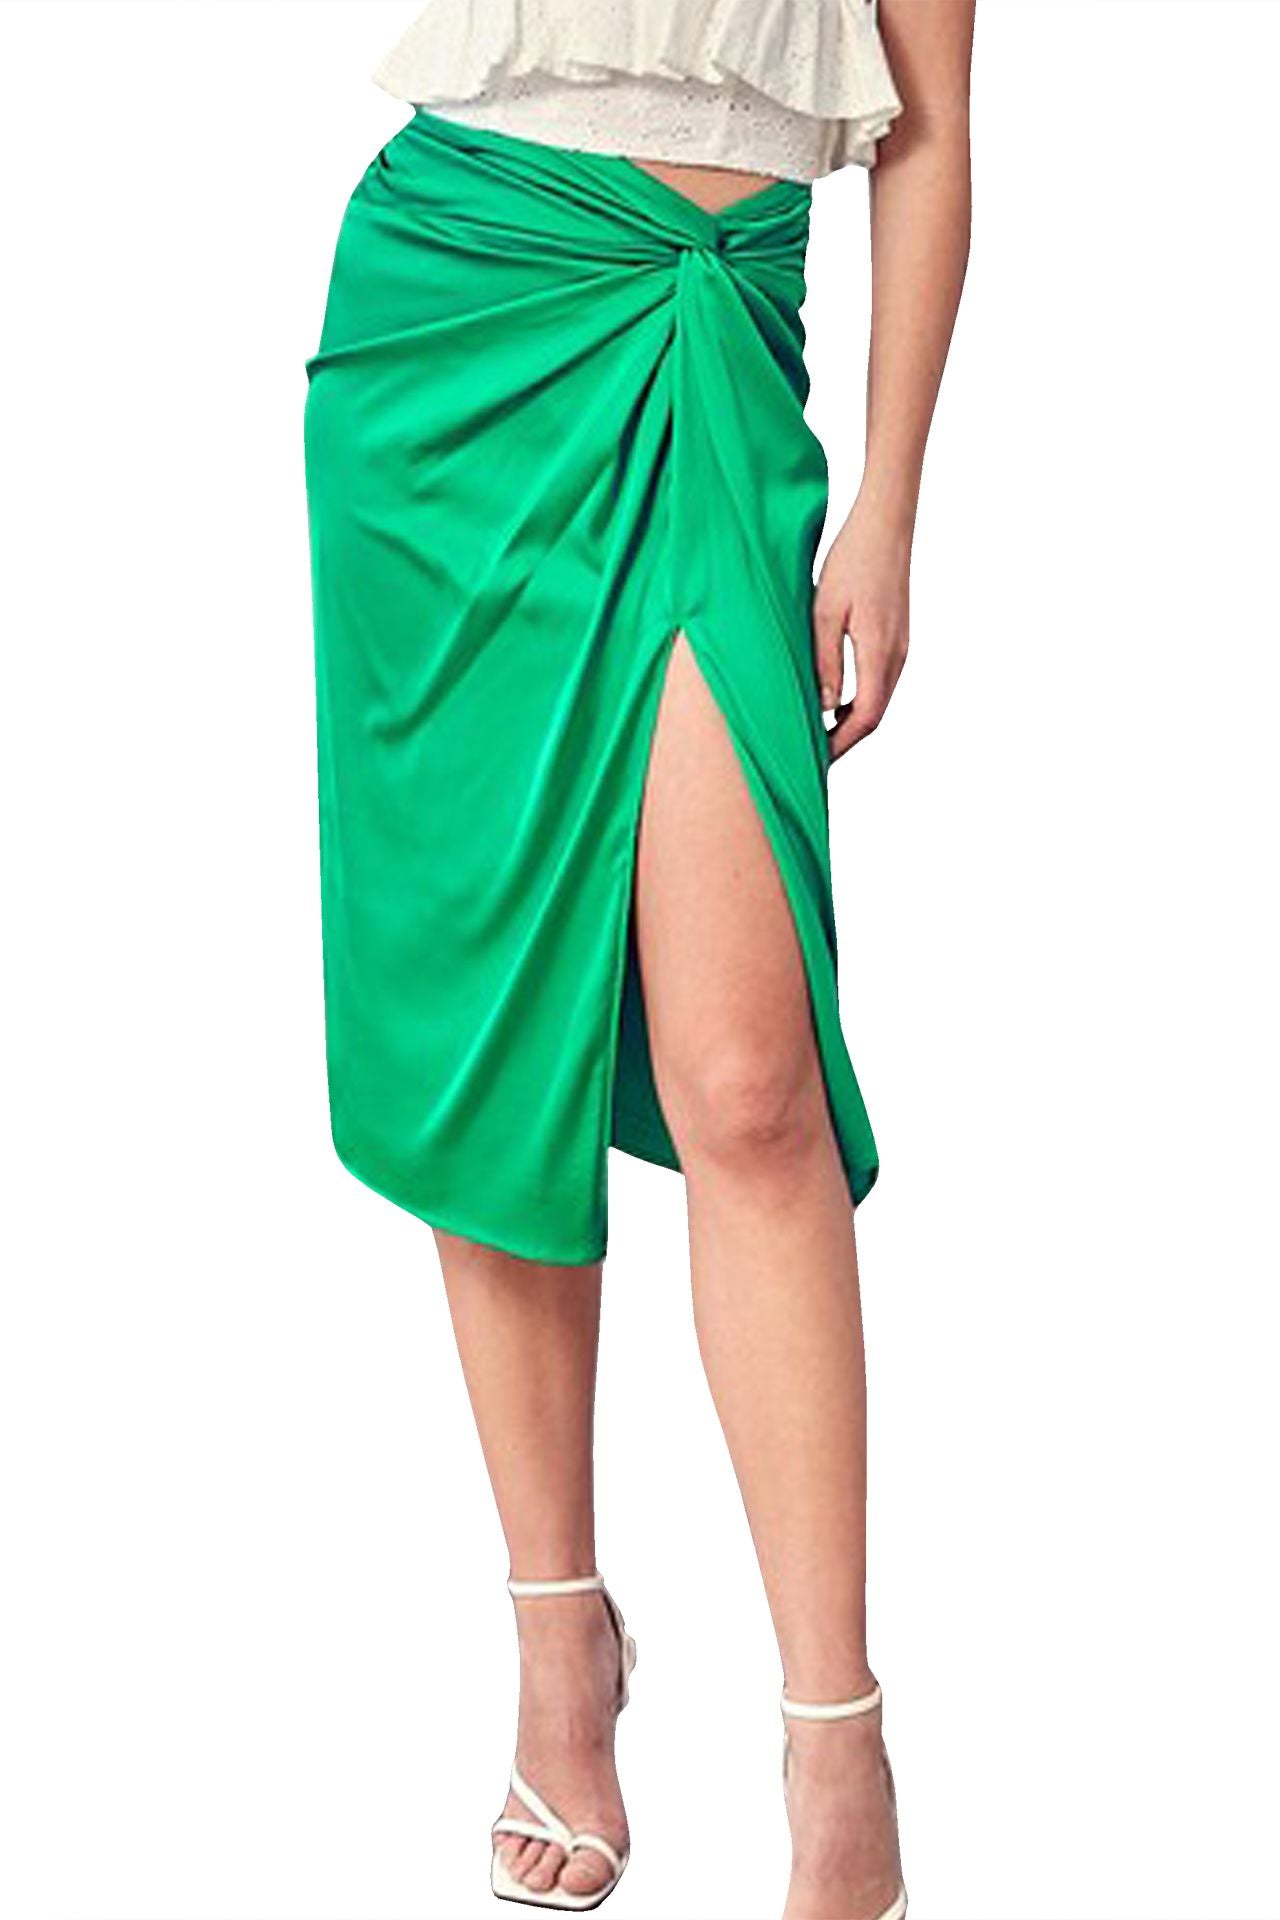 Green Sarong Skirt for Women